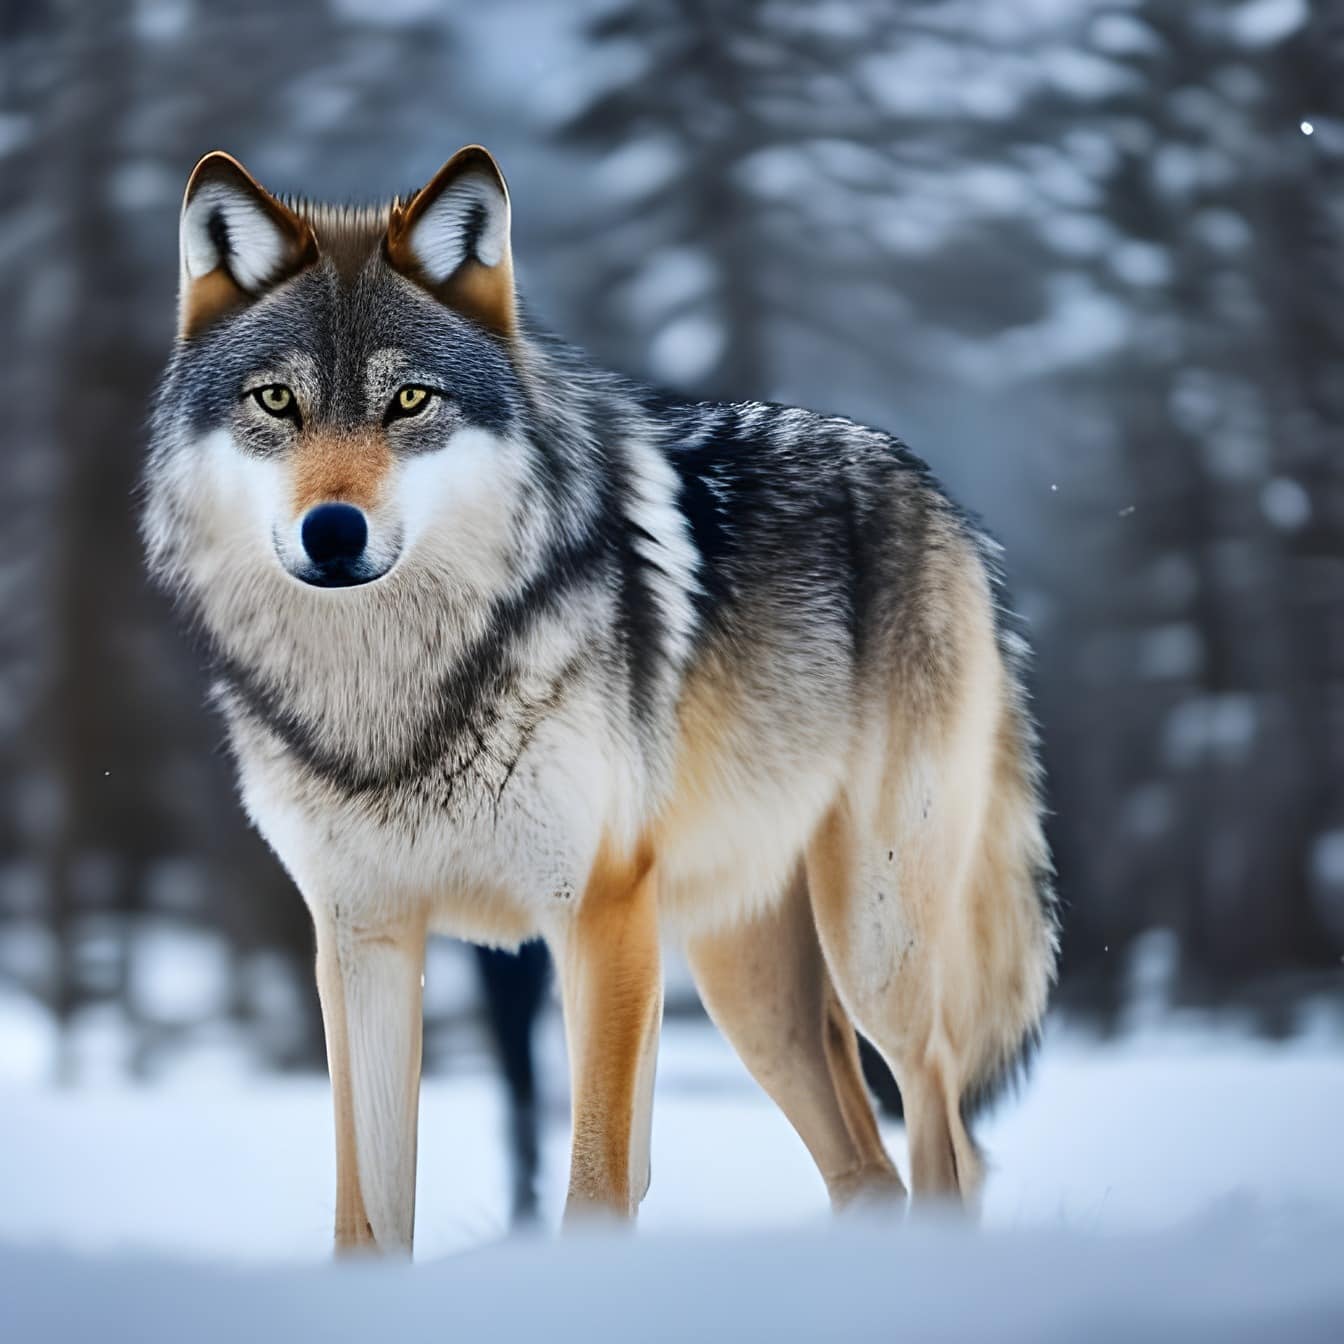 Serigala (Canis lupus) di salju – seni kecerdasan buatan